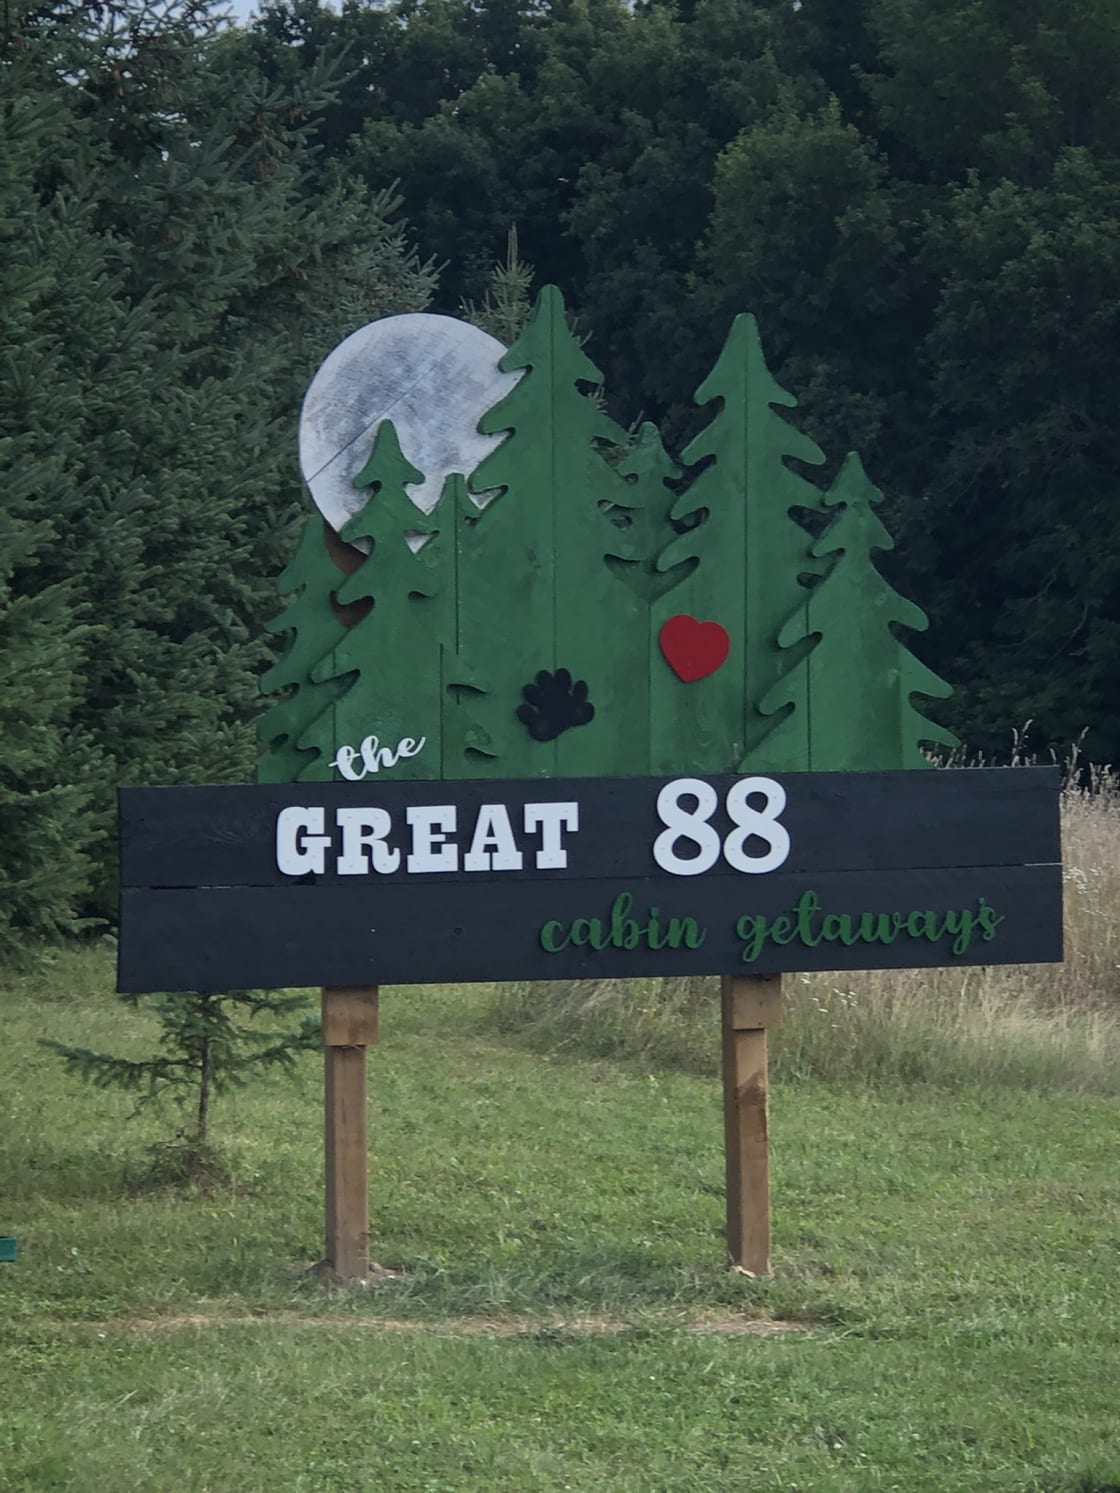 The Great 88 cabin getaways